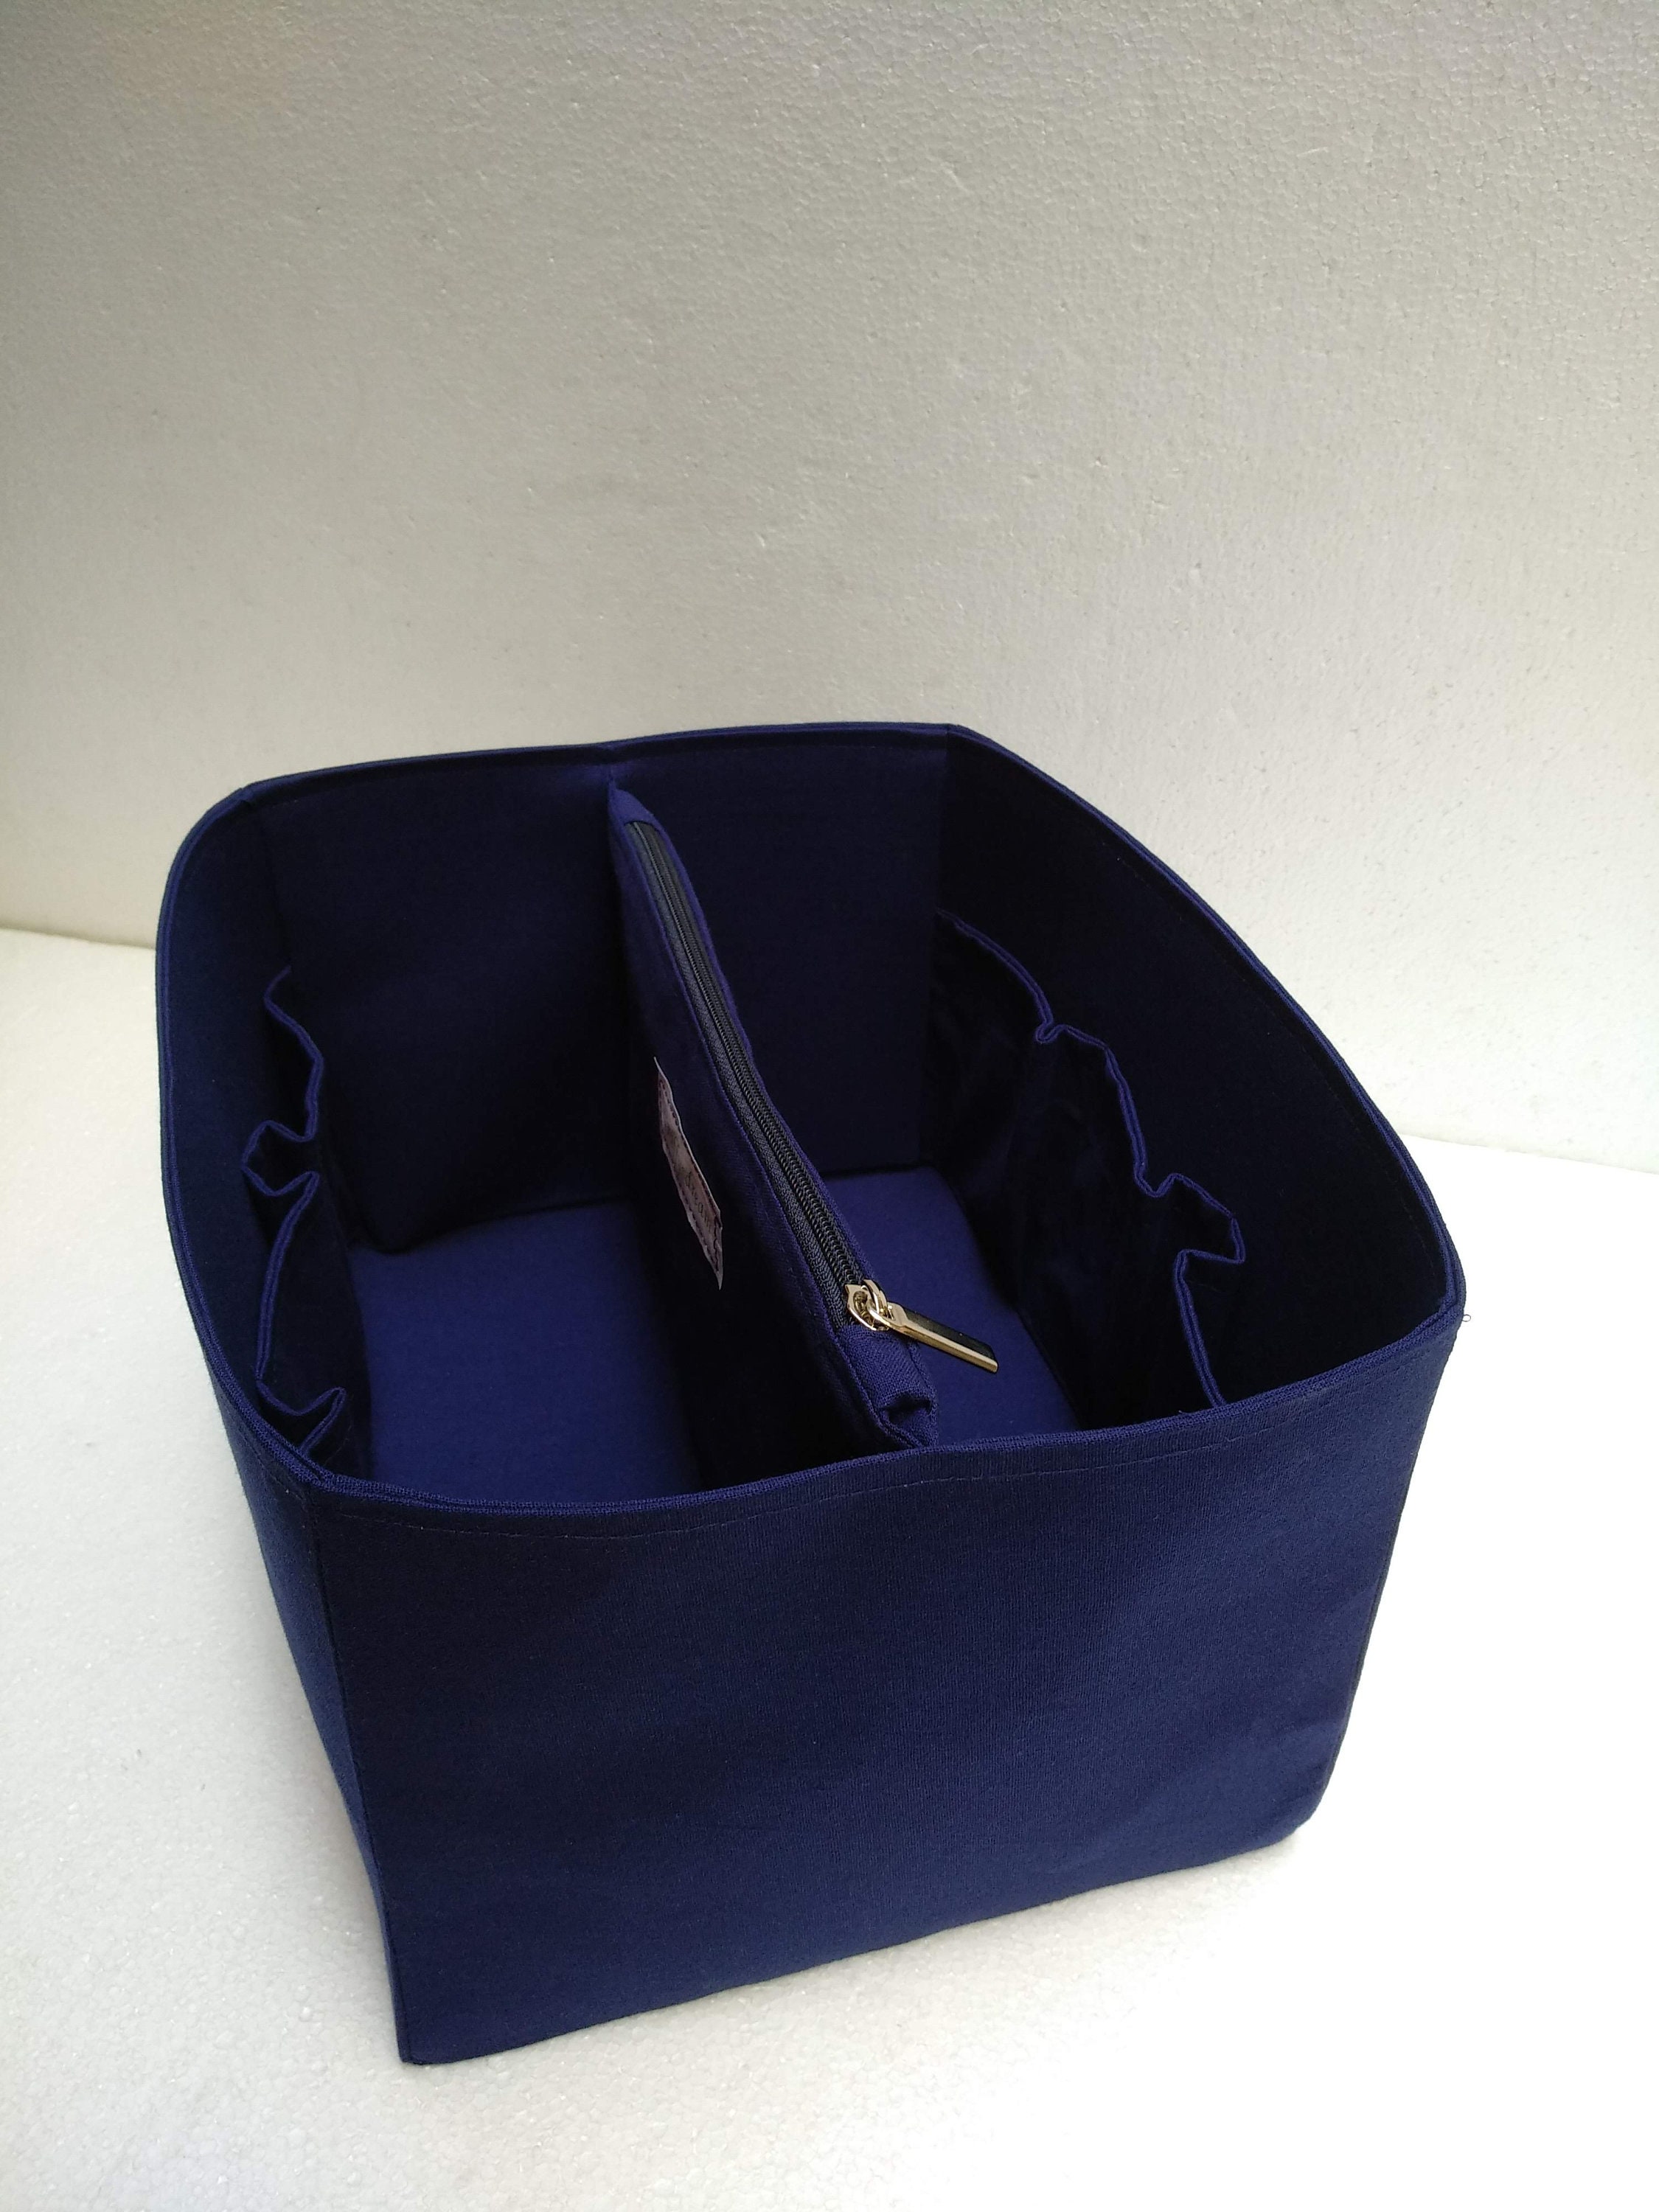 HERMÉS PICOTIN 26 BAG ORGANISER!  3mm felt 'tulip shape' handbag liner, UK  